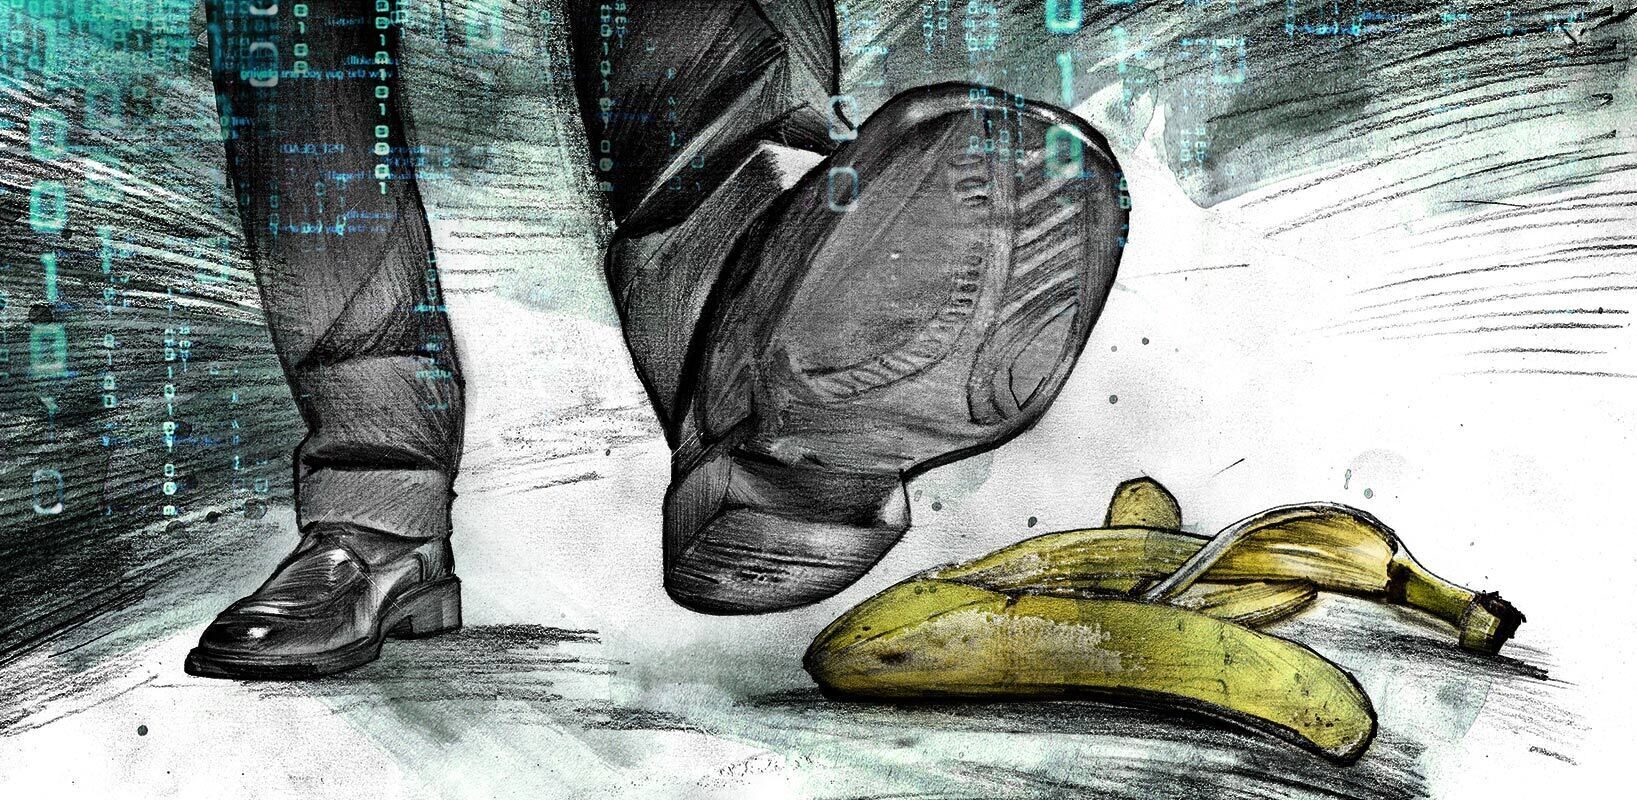 Banana hack computer cyber spy crime - Kornel Illustration | Kornel Stadler portfolio